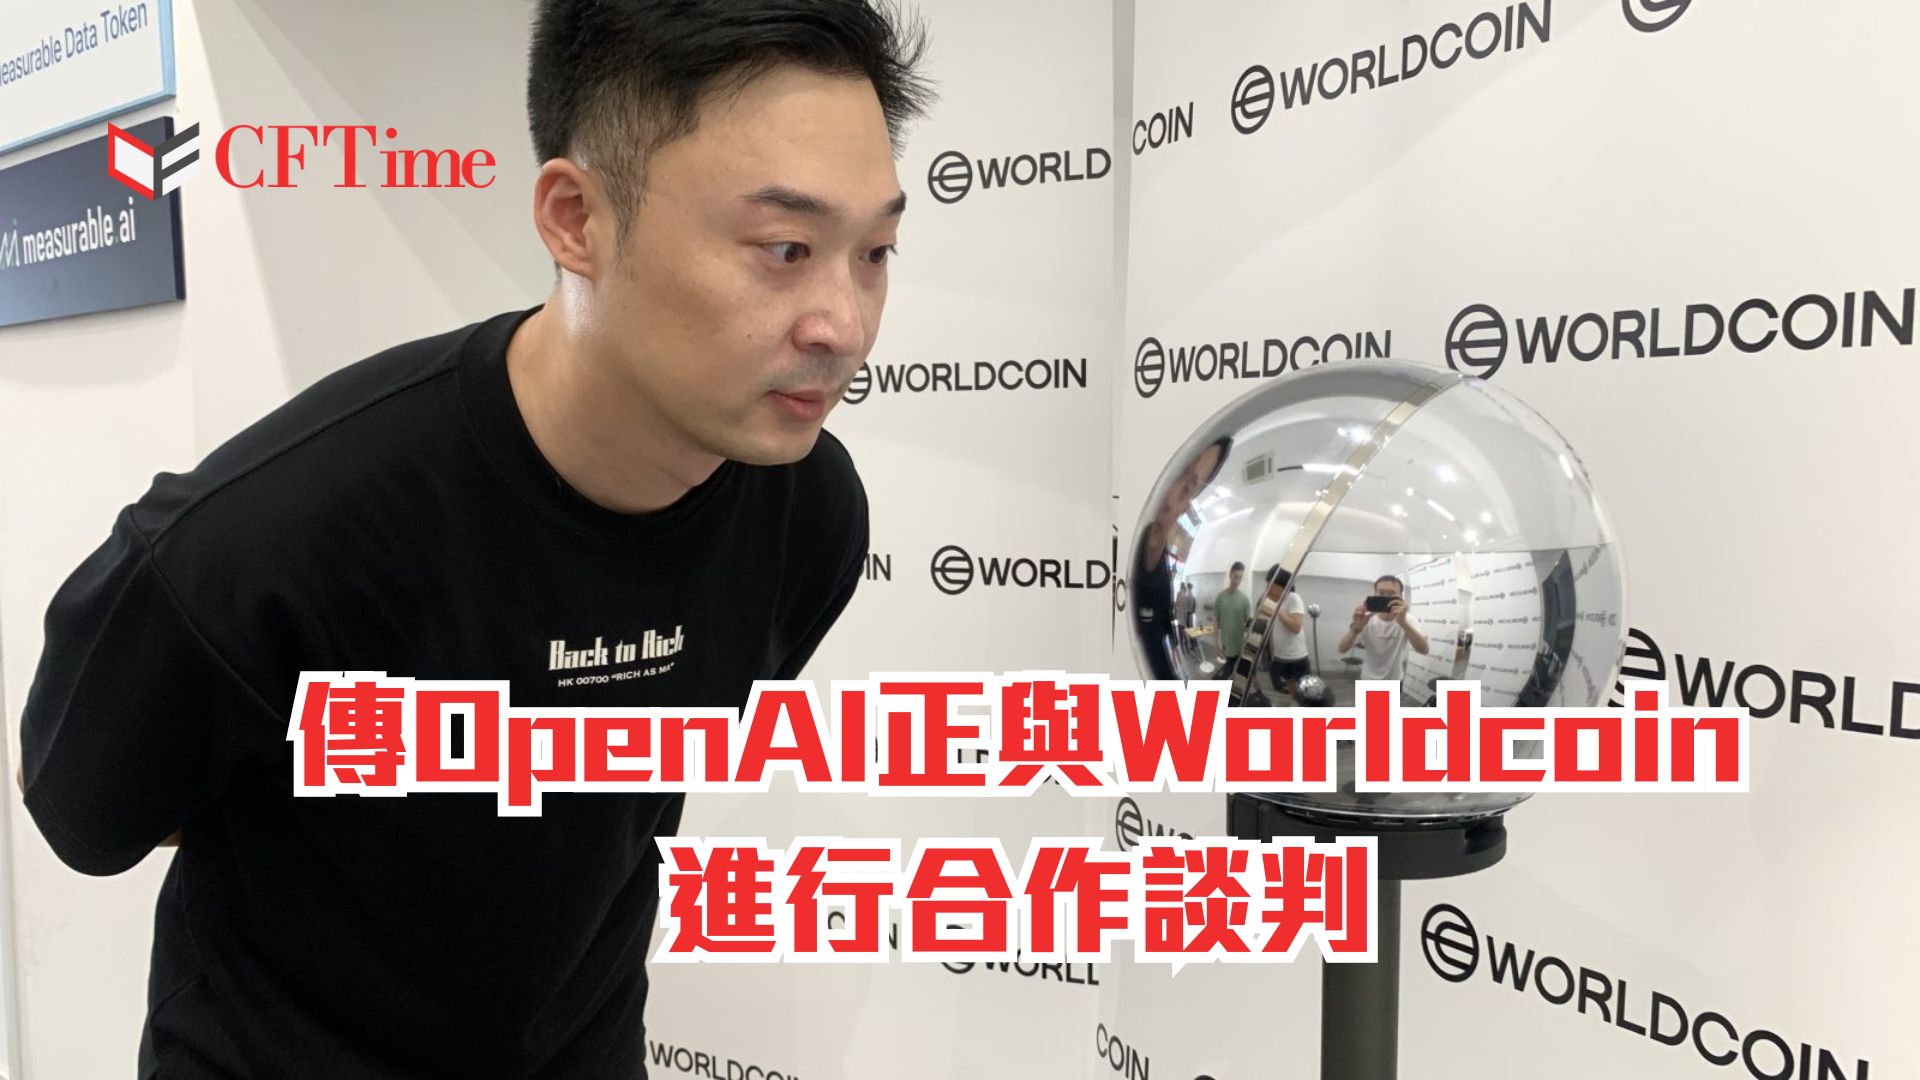 OpenAI正與Worldcoin進行合作談判